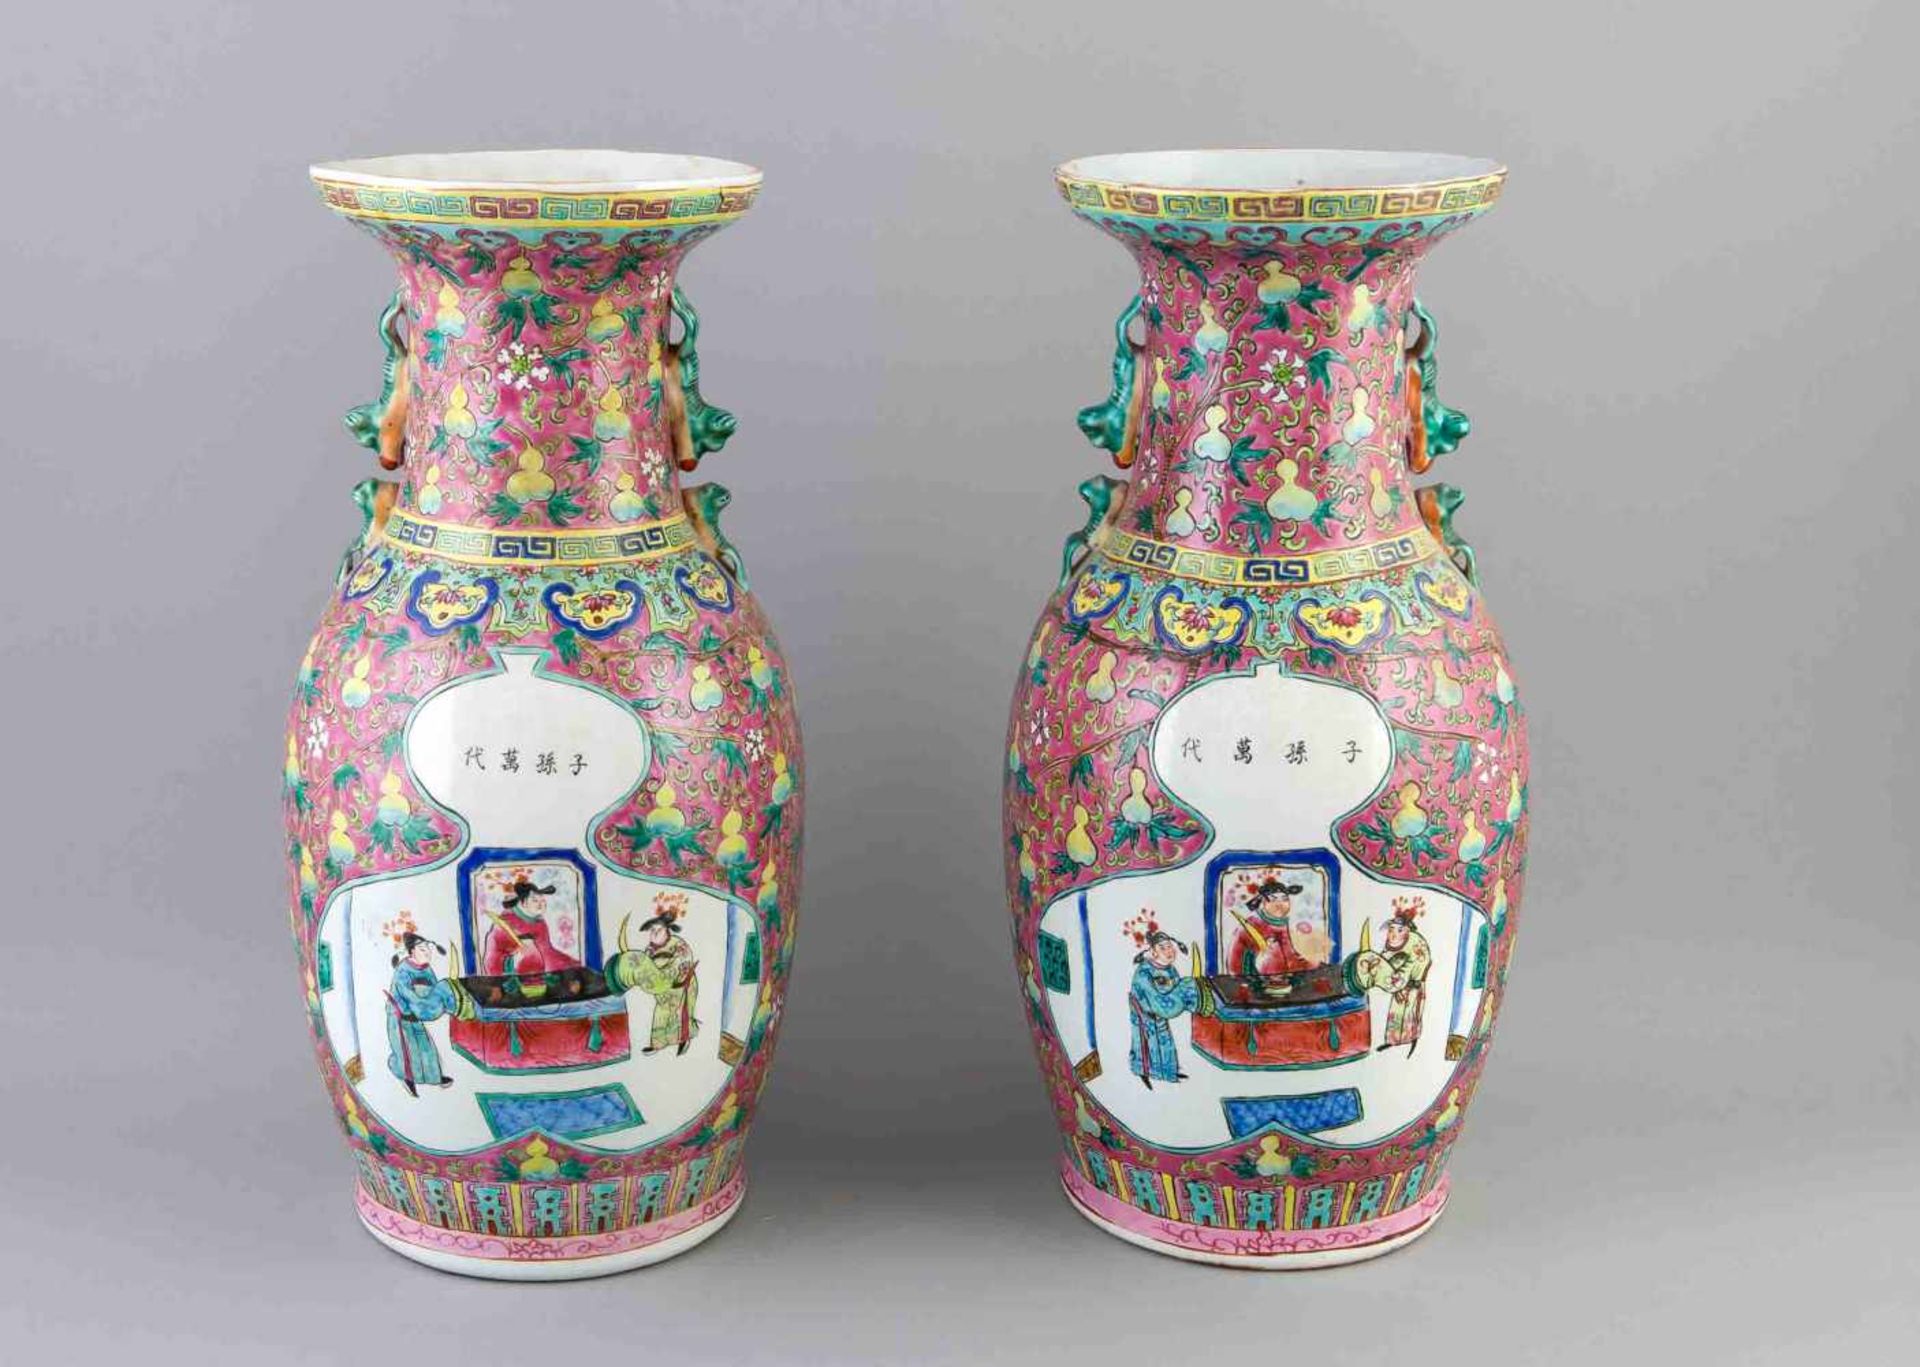 Paar Famille Rose Vasen, China, 19. Jh., Porzellan mit polychromer Emaillebemalung, gedrungene